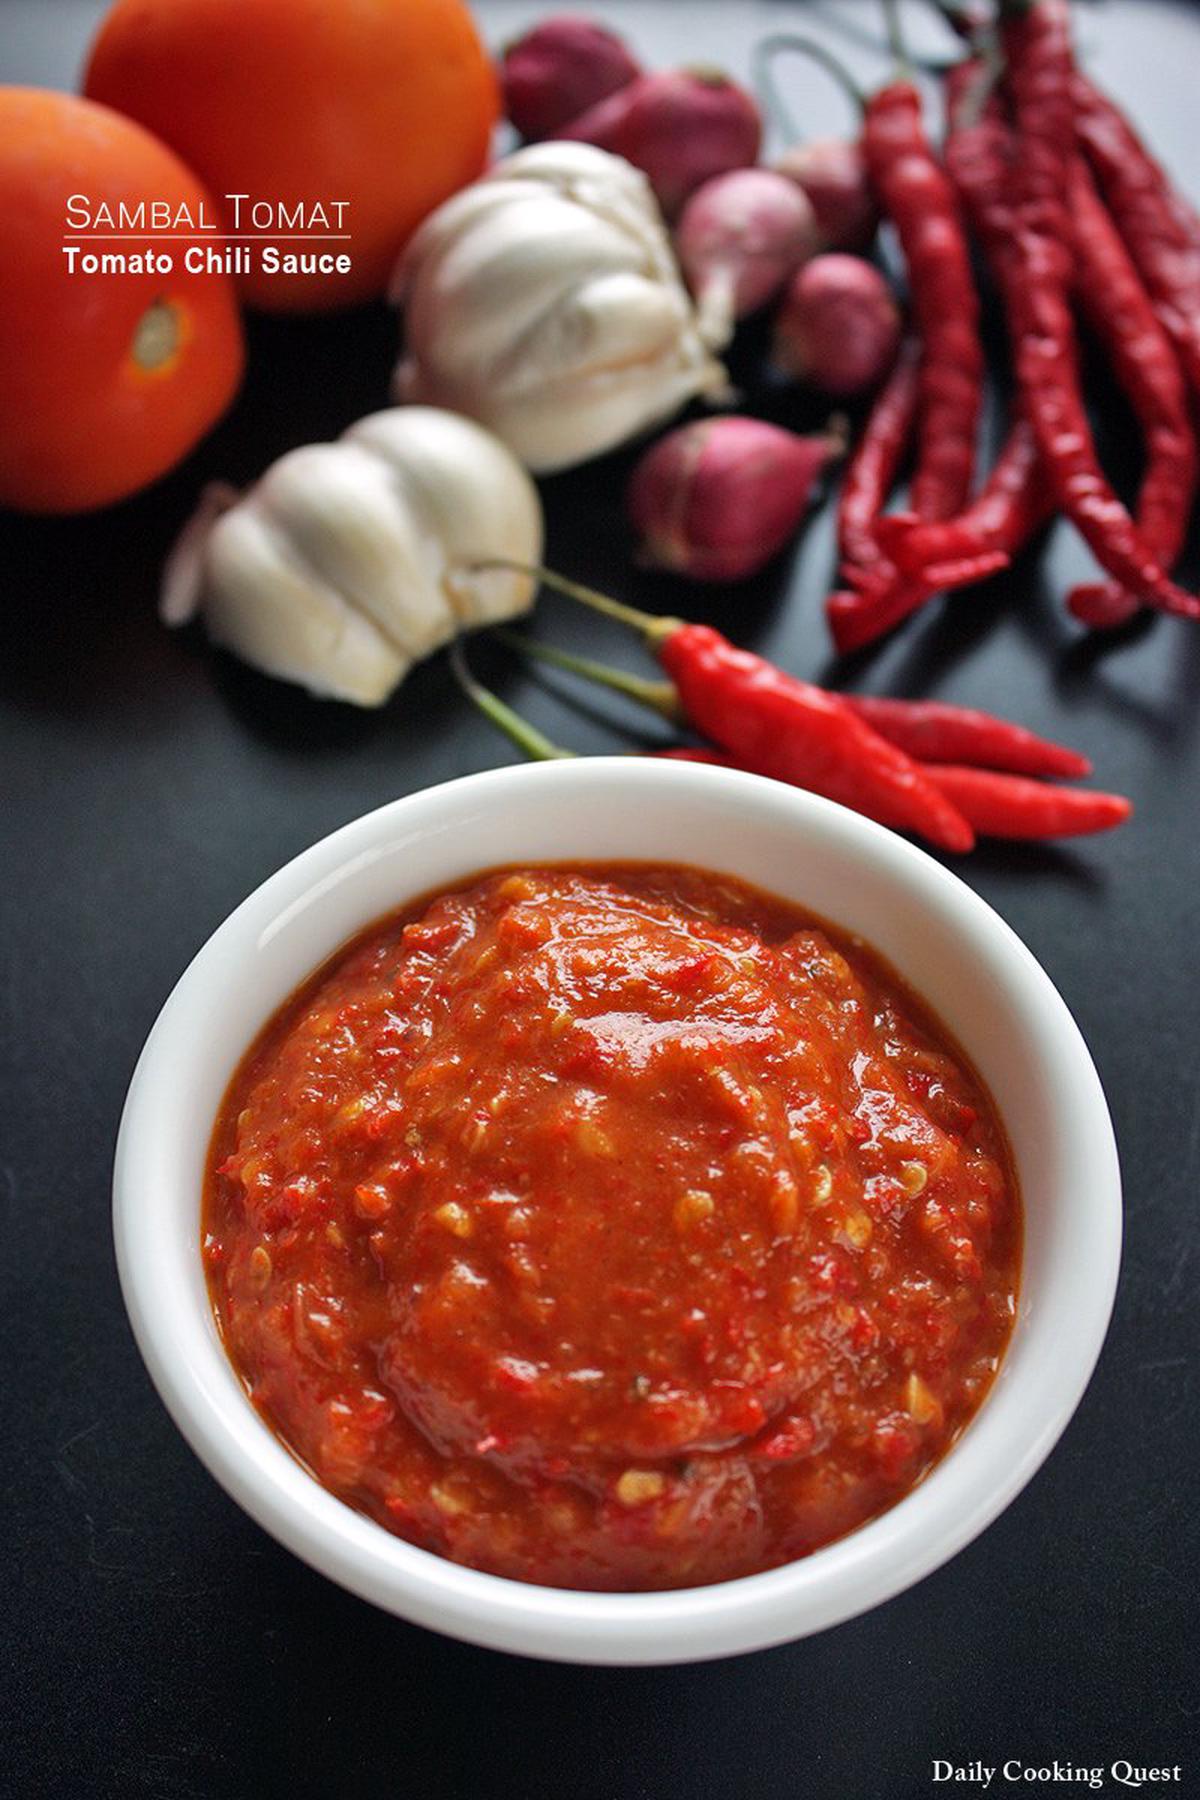 Sambal Tomat - Tomato Chili Sauce